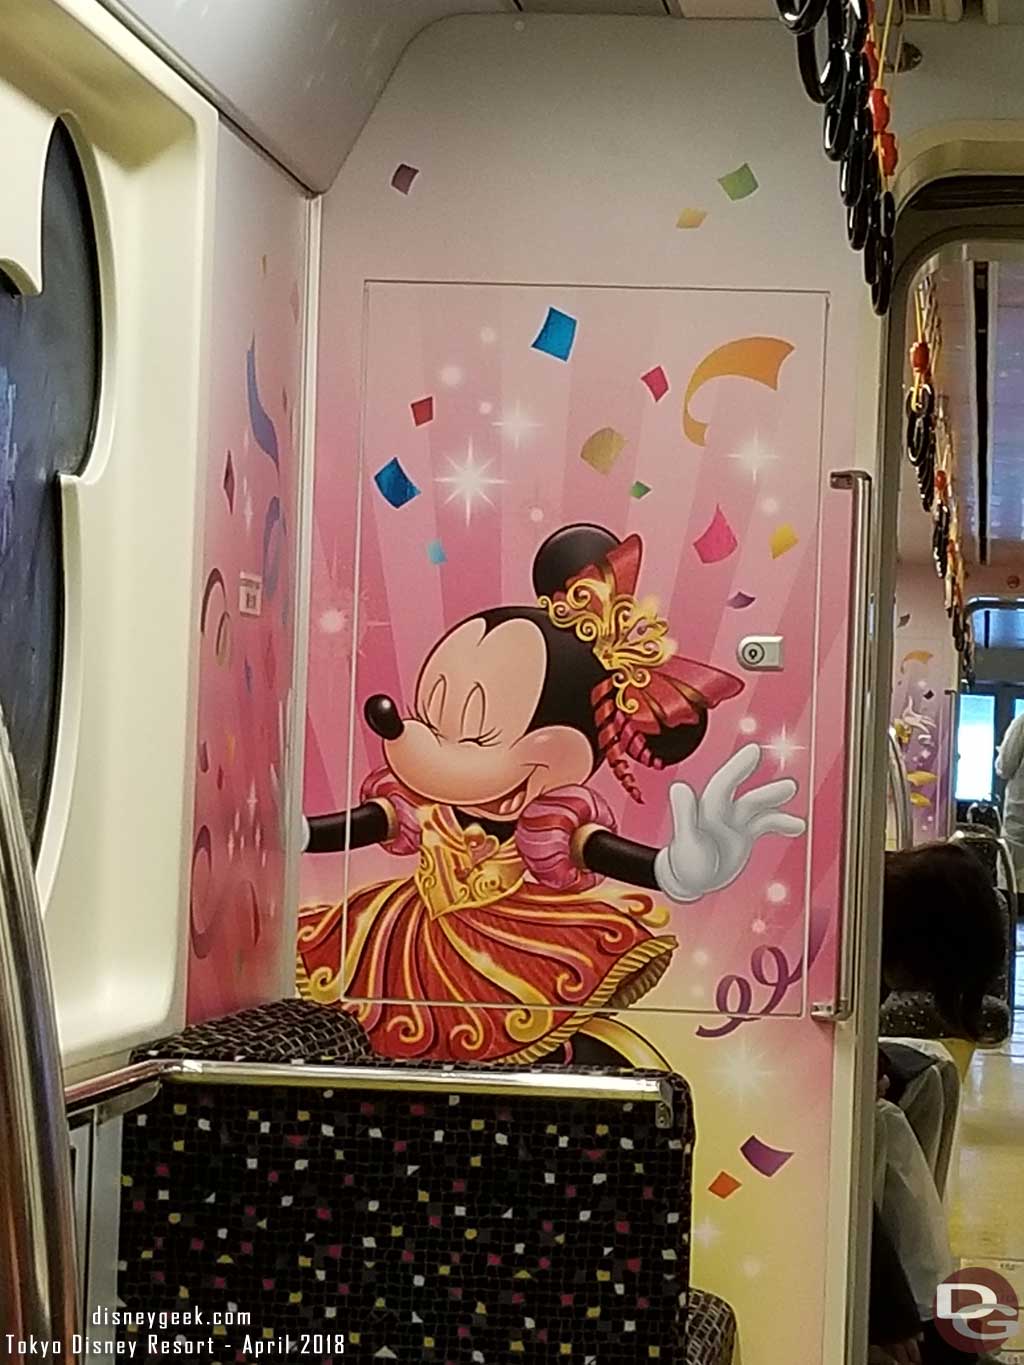 2018 Tokyo Disney Happiest Celebration Liner